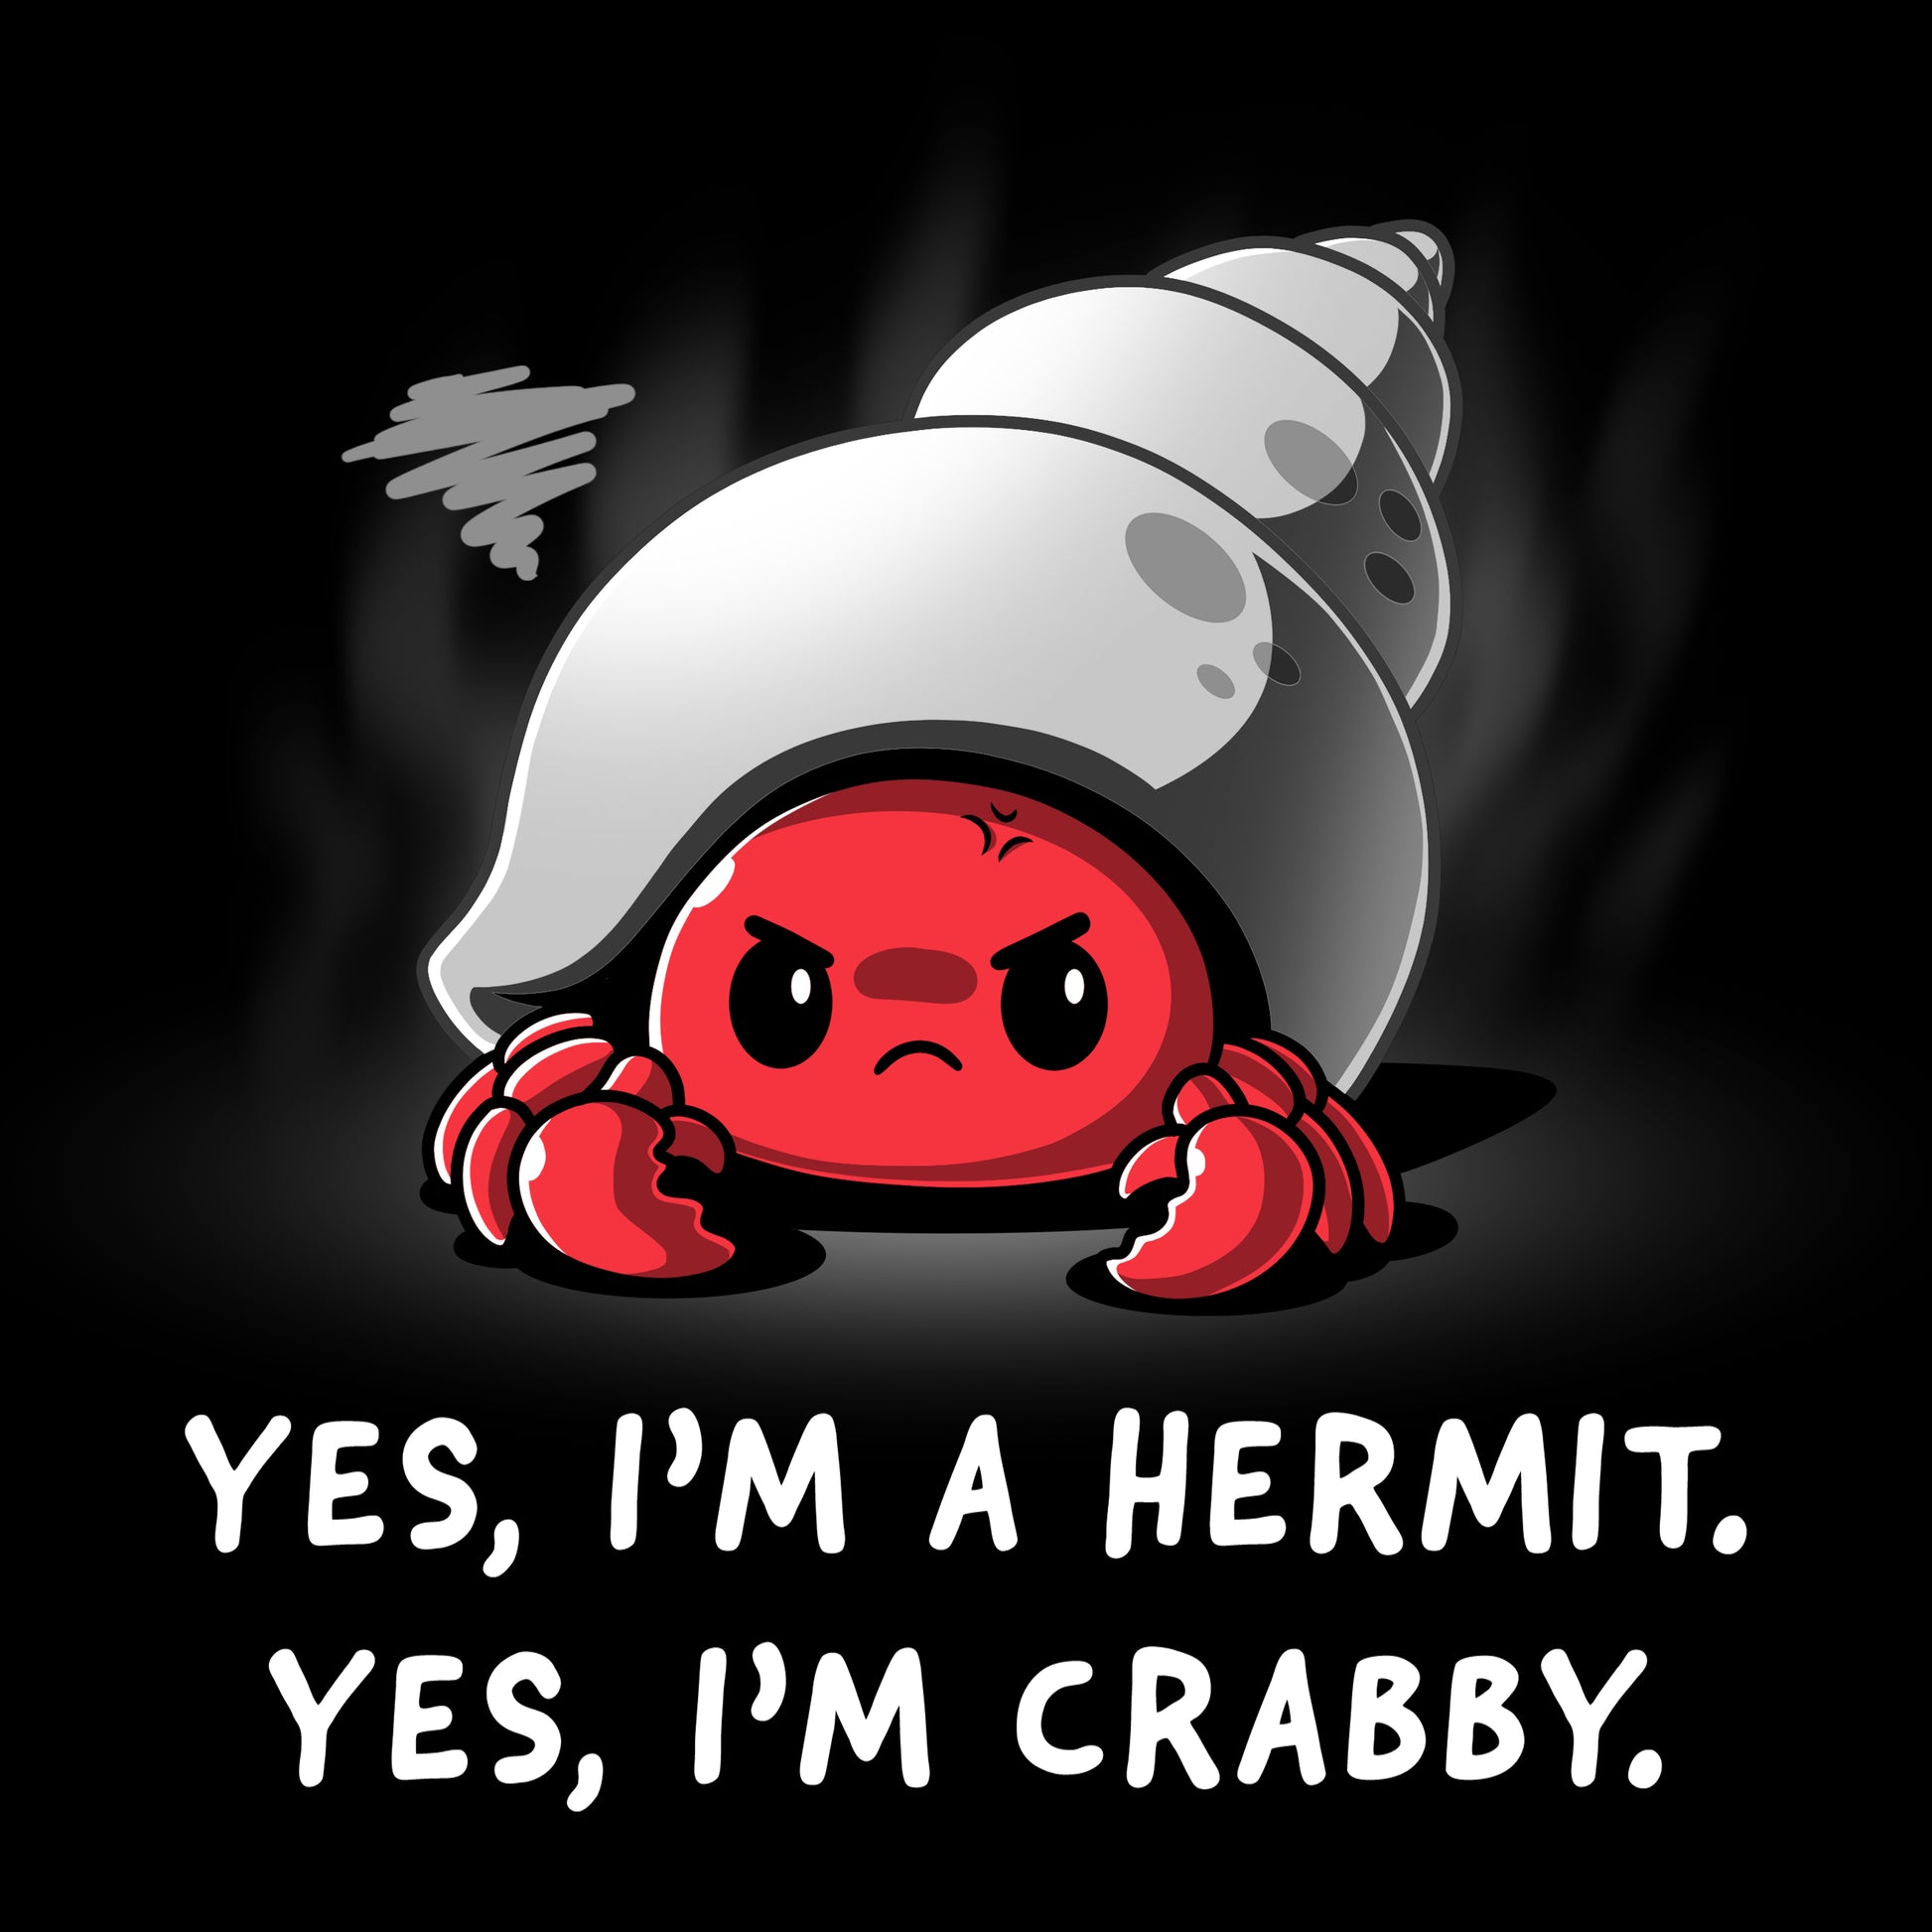 Yes, I'm an I'm a Hermit and I'm crabby, like a shell-fish.